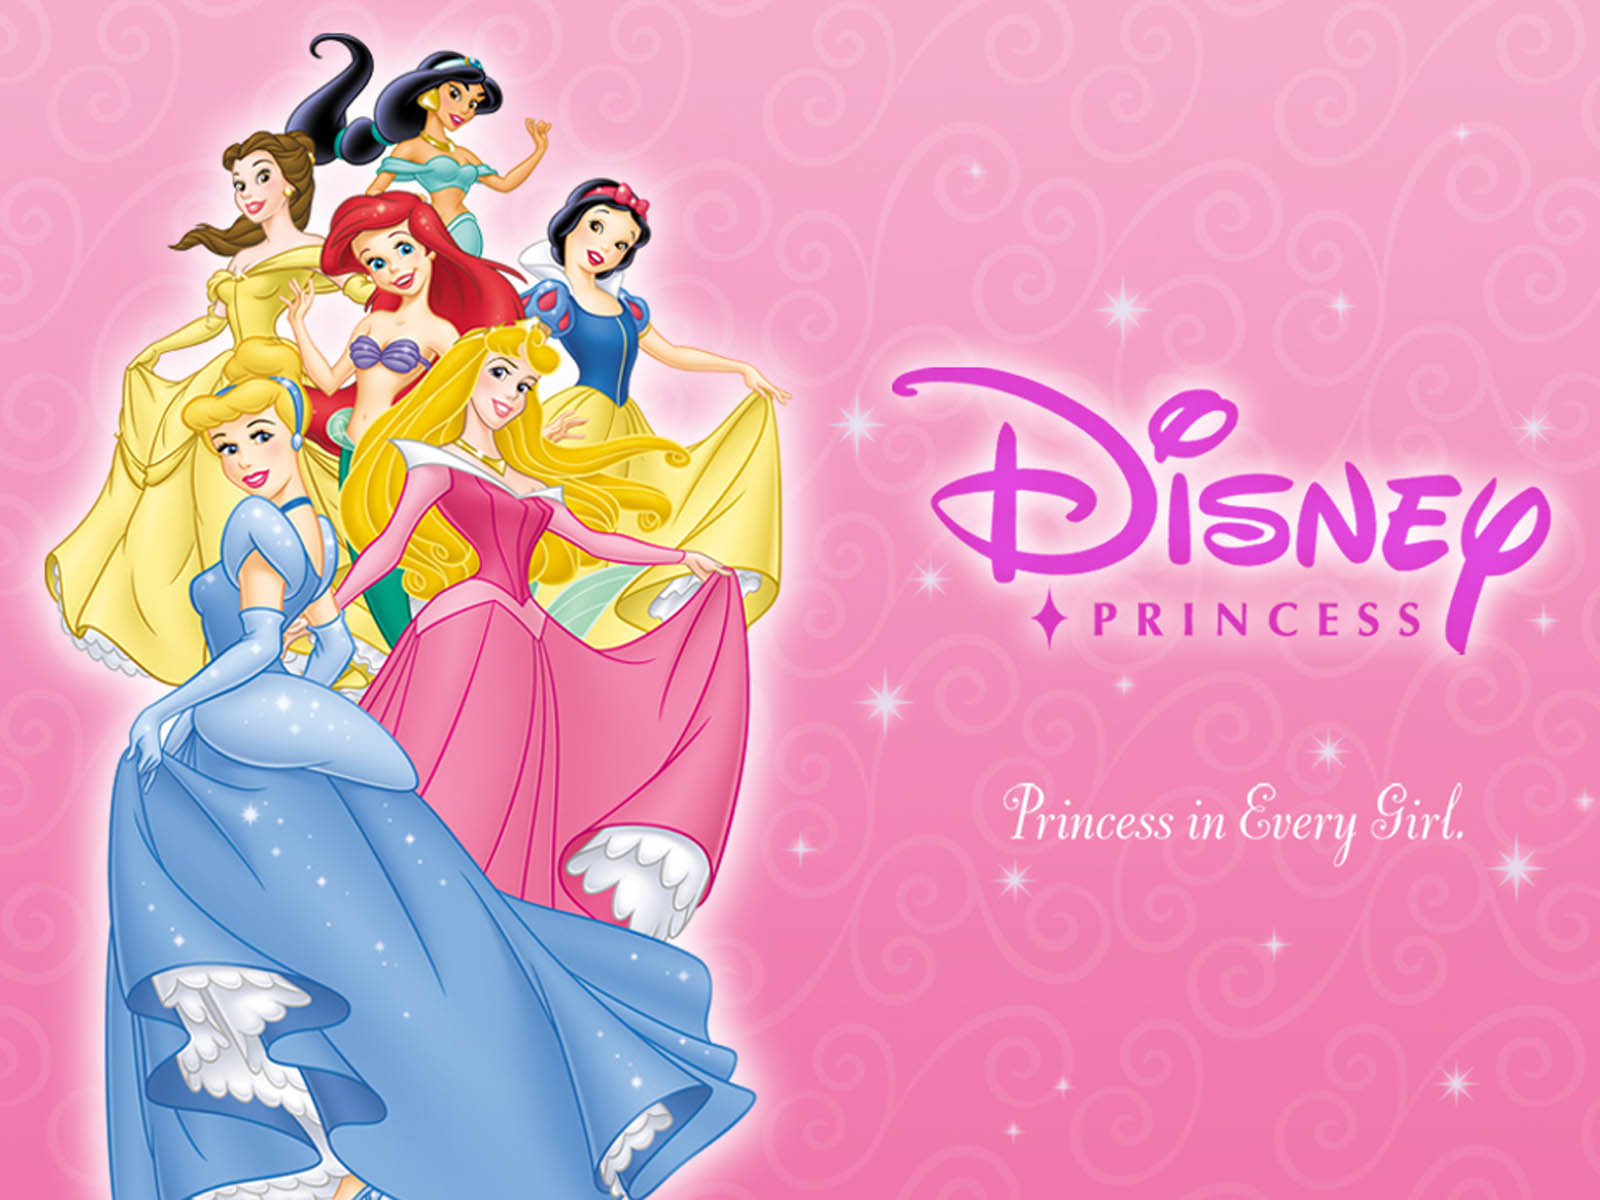 disney princess wallpaper,cartoon,text,pink,illustration,graphics